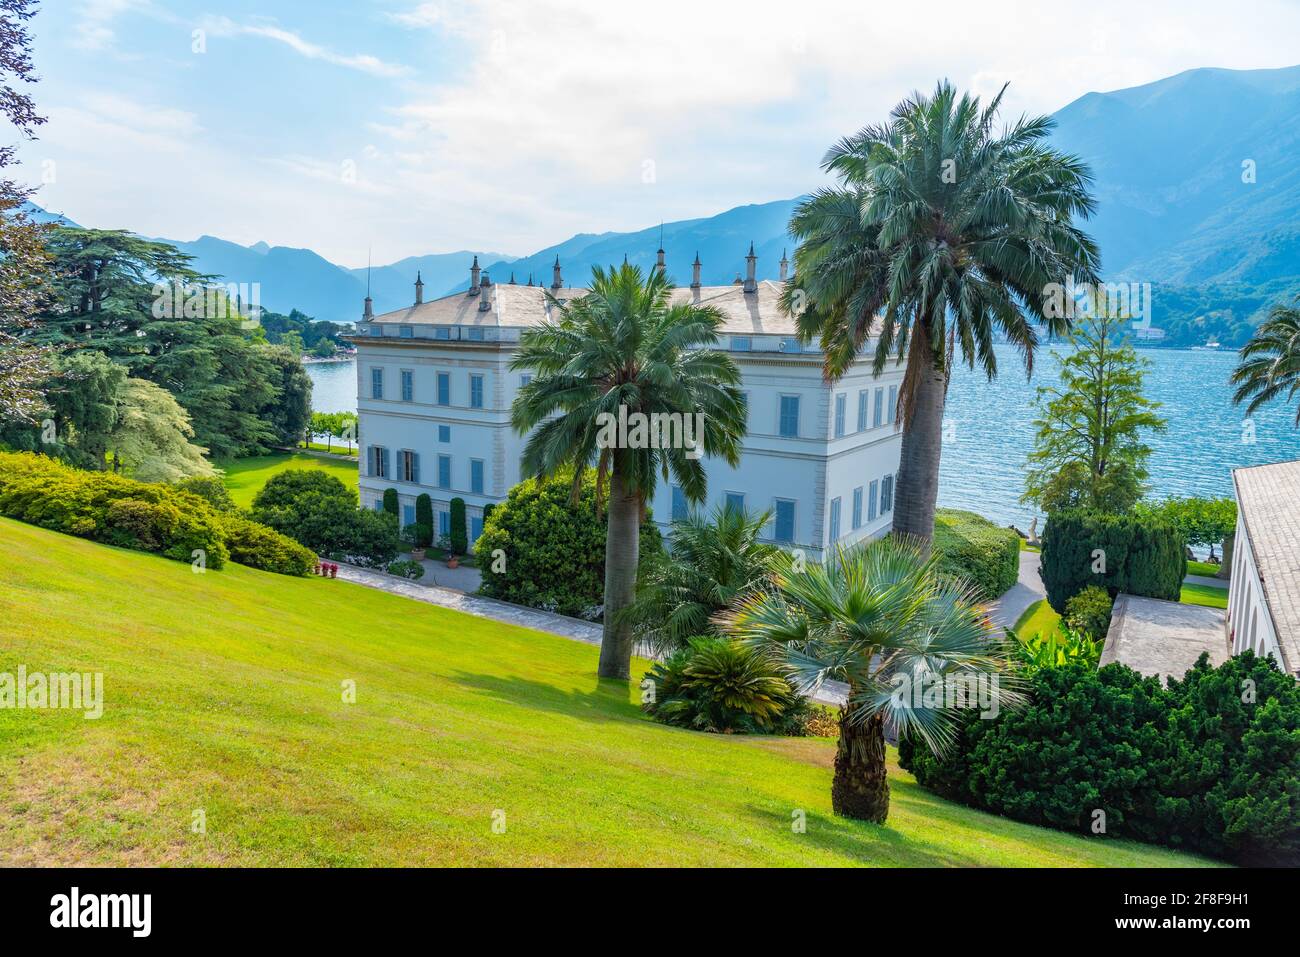 Villa Melzi at Lake Como in Italy Stock Photo